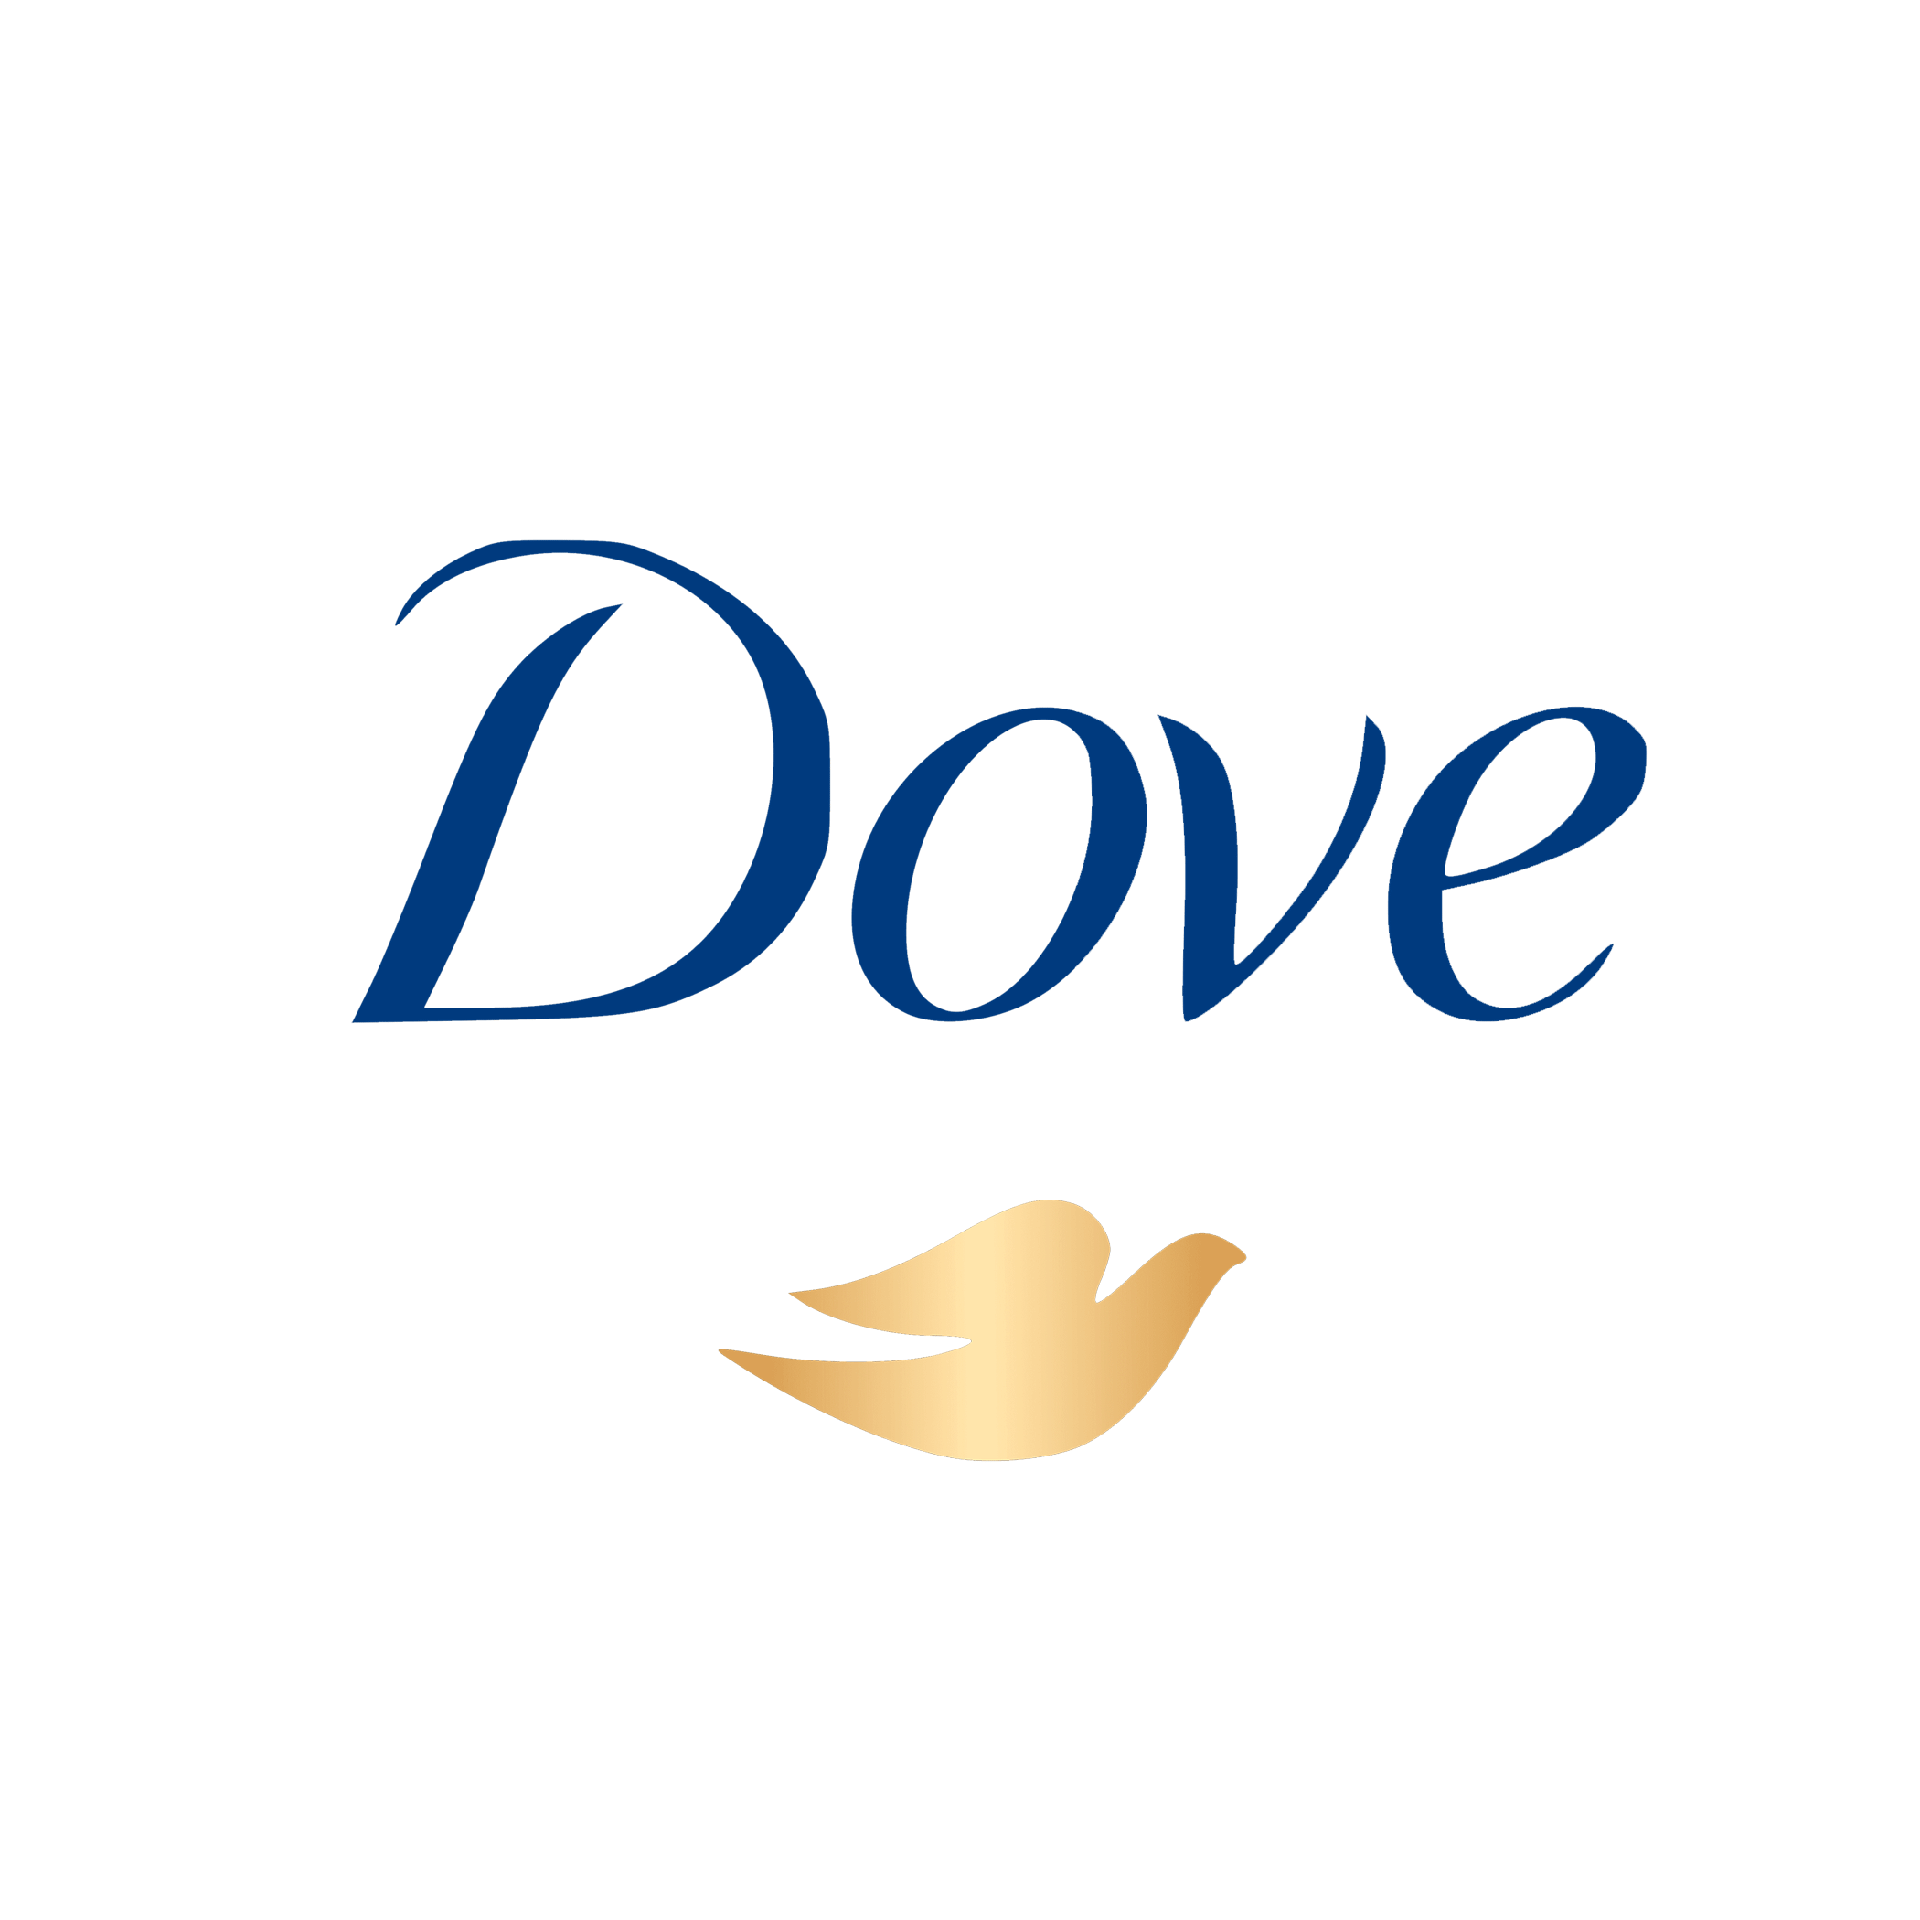 Product Brand: Dove